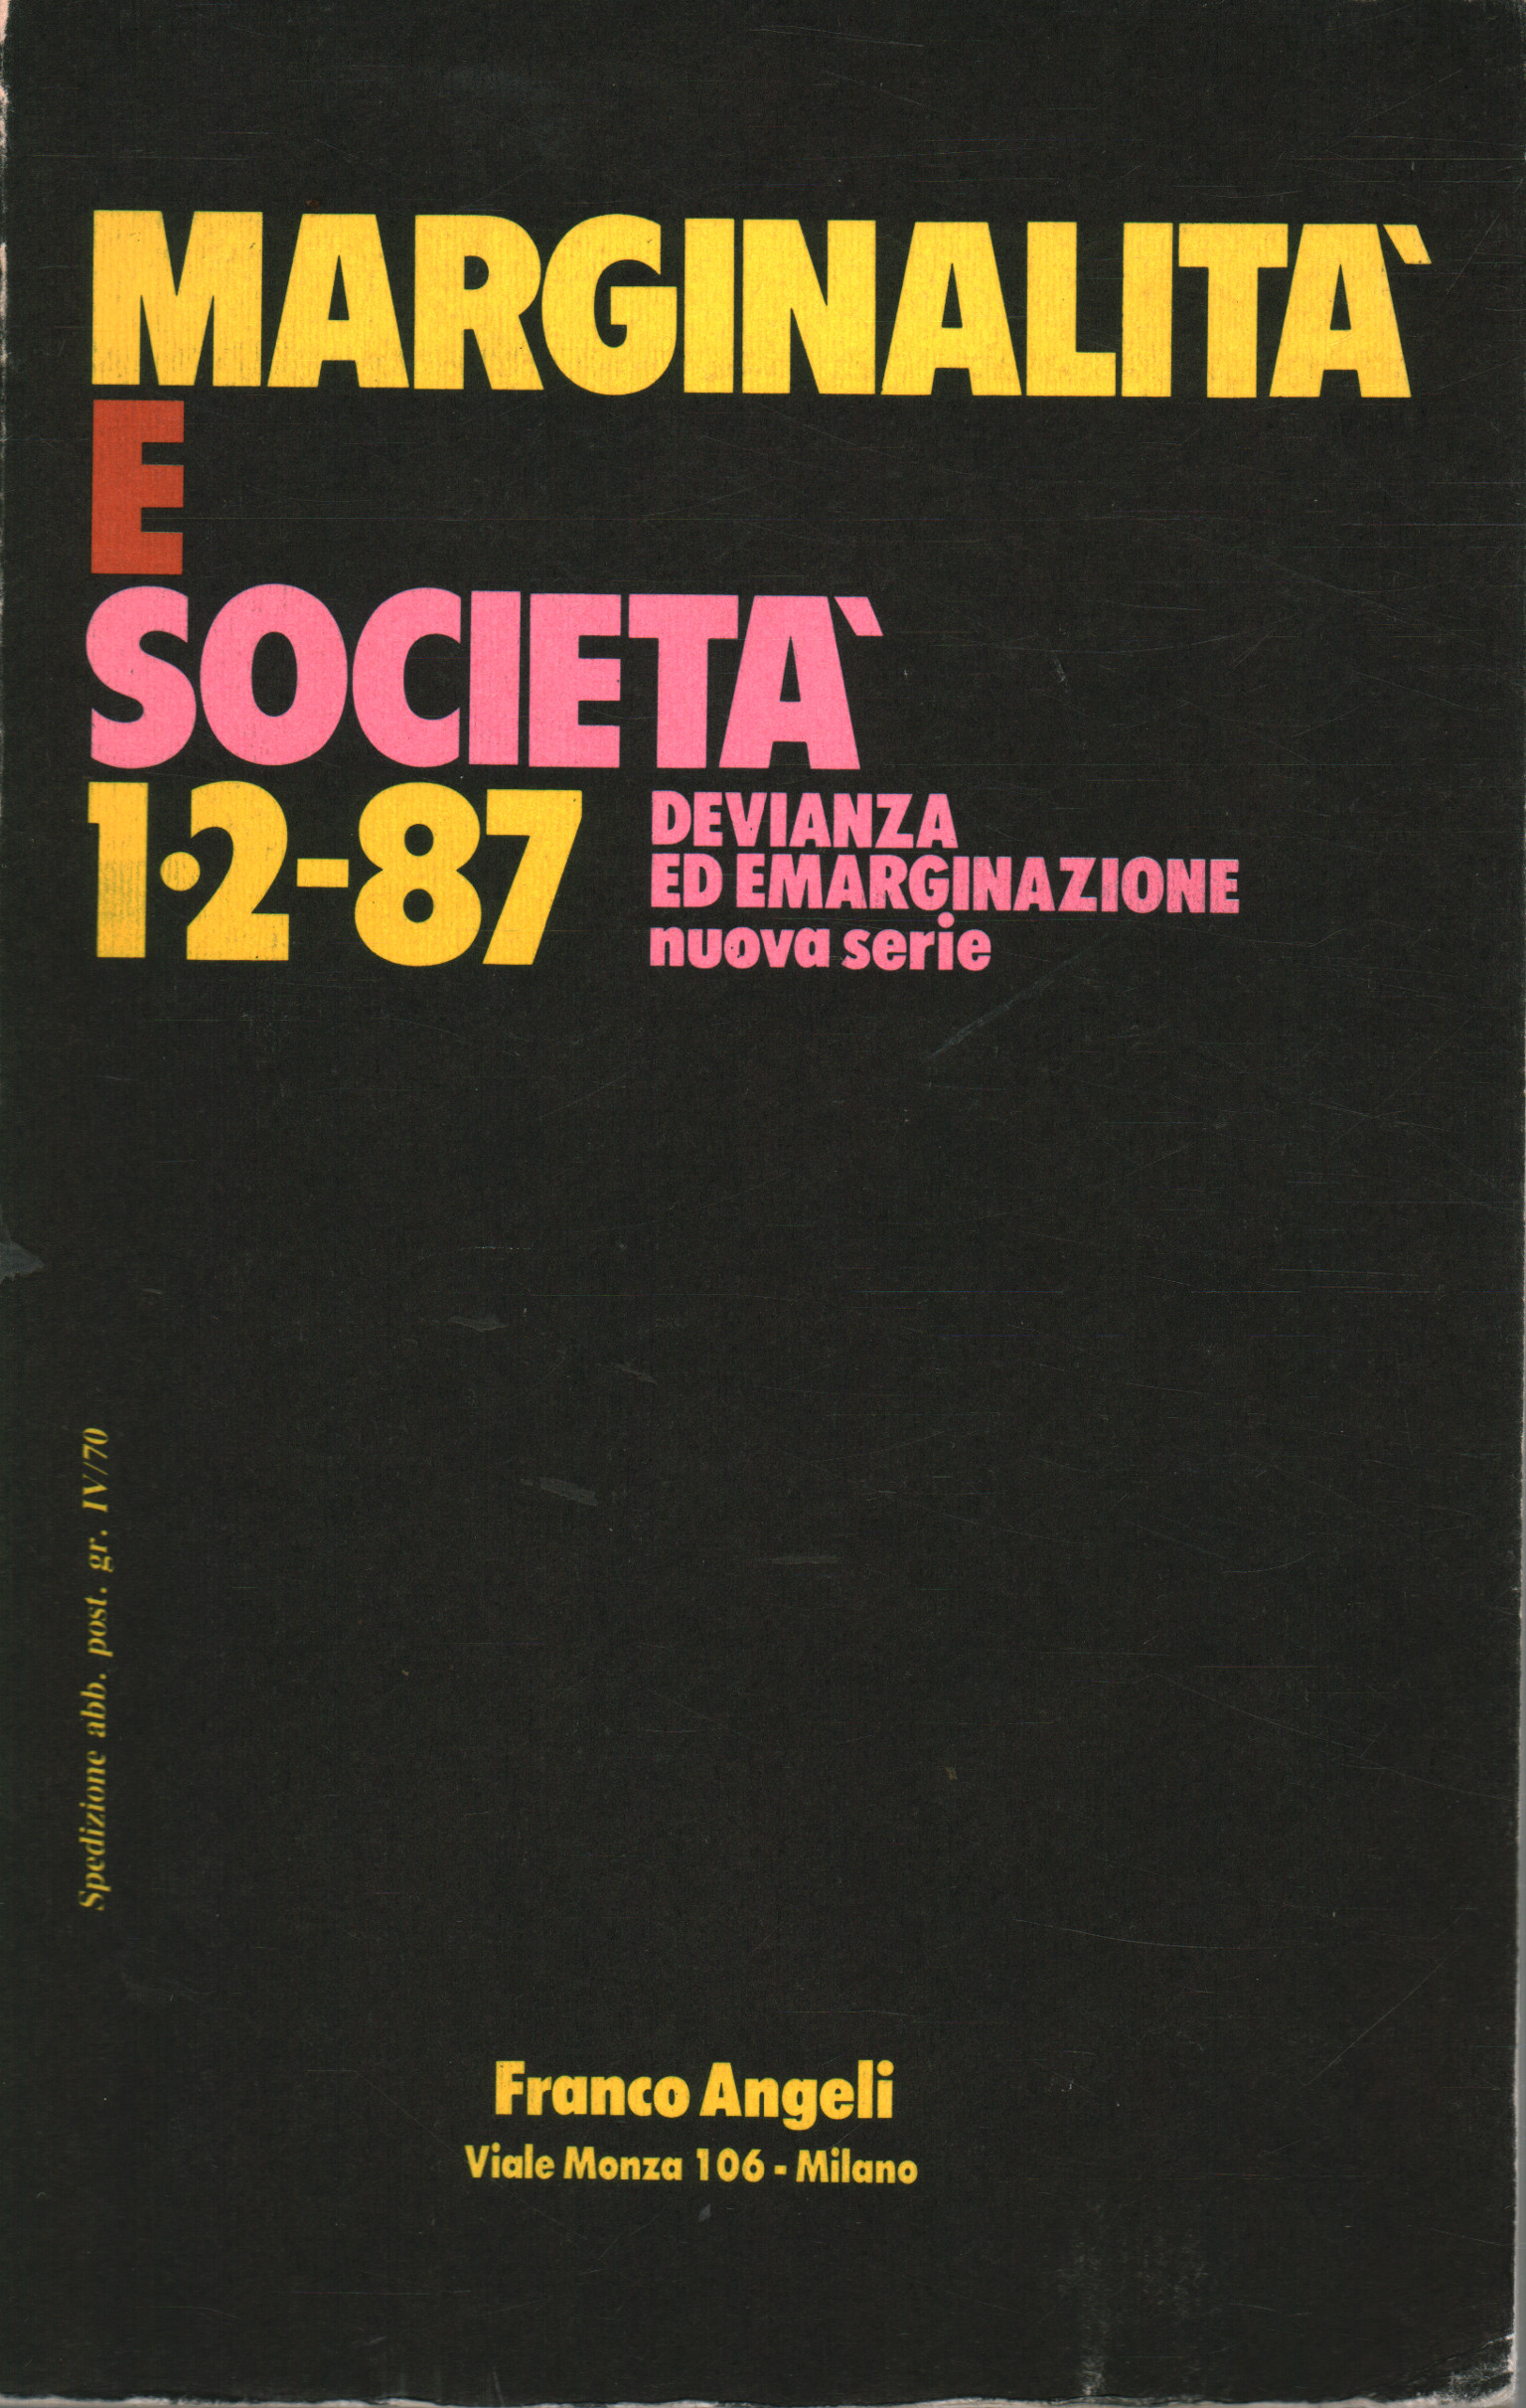 Marginality and society 1 2-87, AA.VV